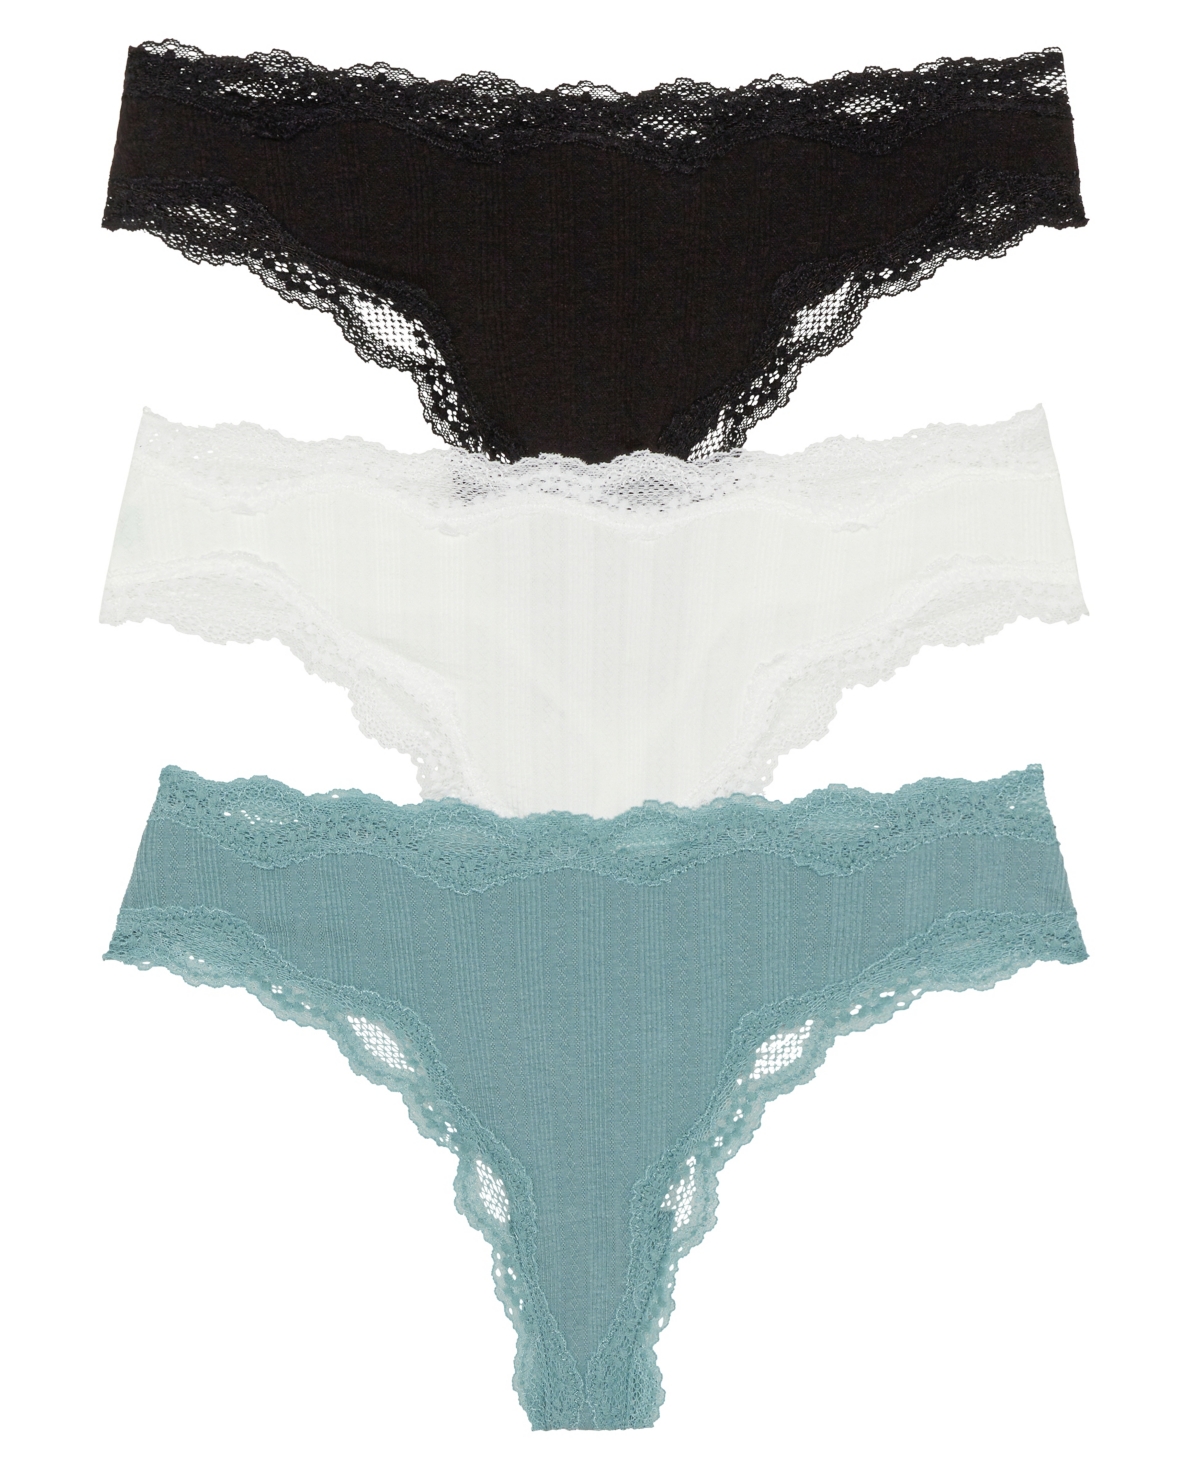 Women's Lorelai Hi-Cut Thong Underwear Set, 3 Pieces - Black, White, Galaxy